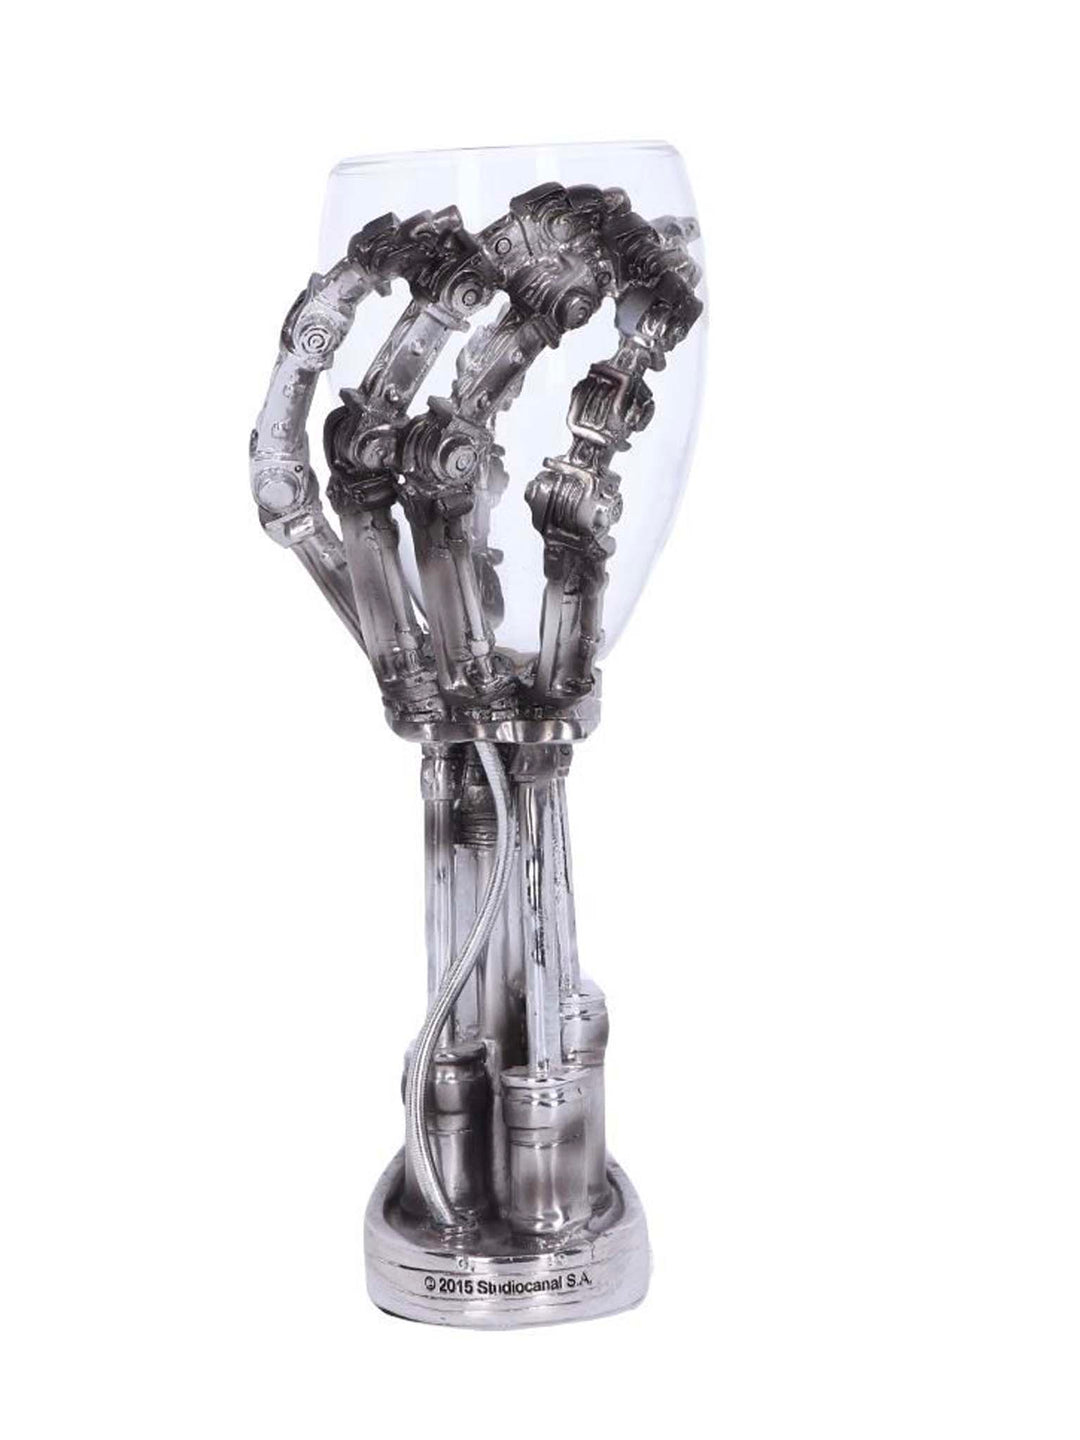 Official Terminator 2 Hand Goblet